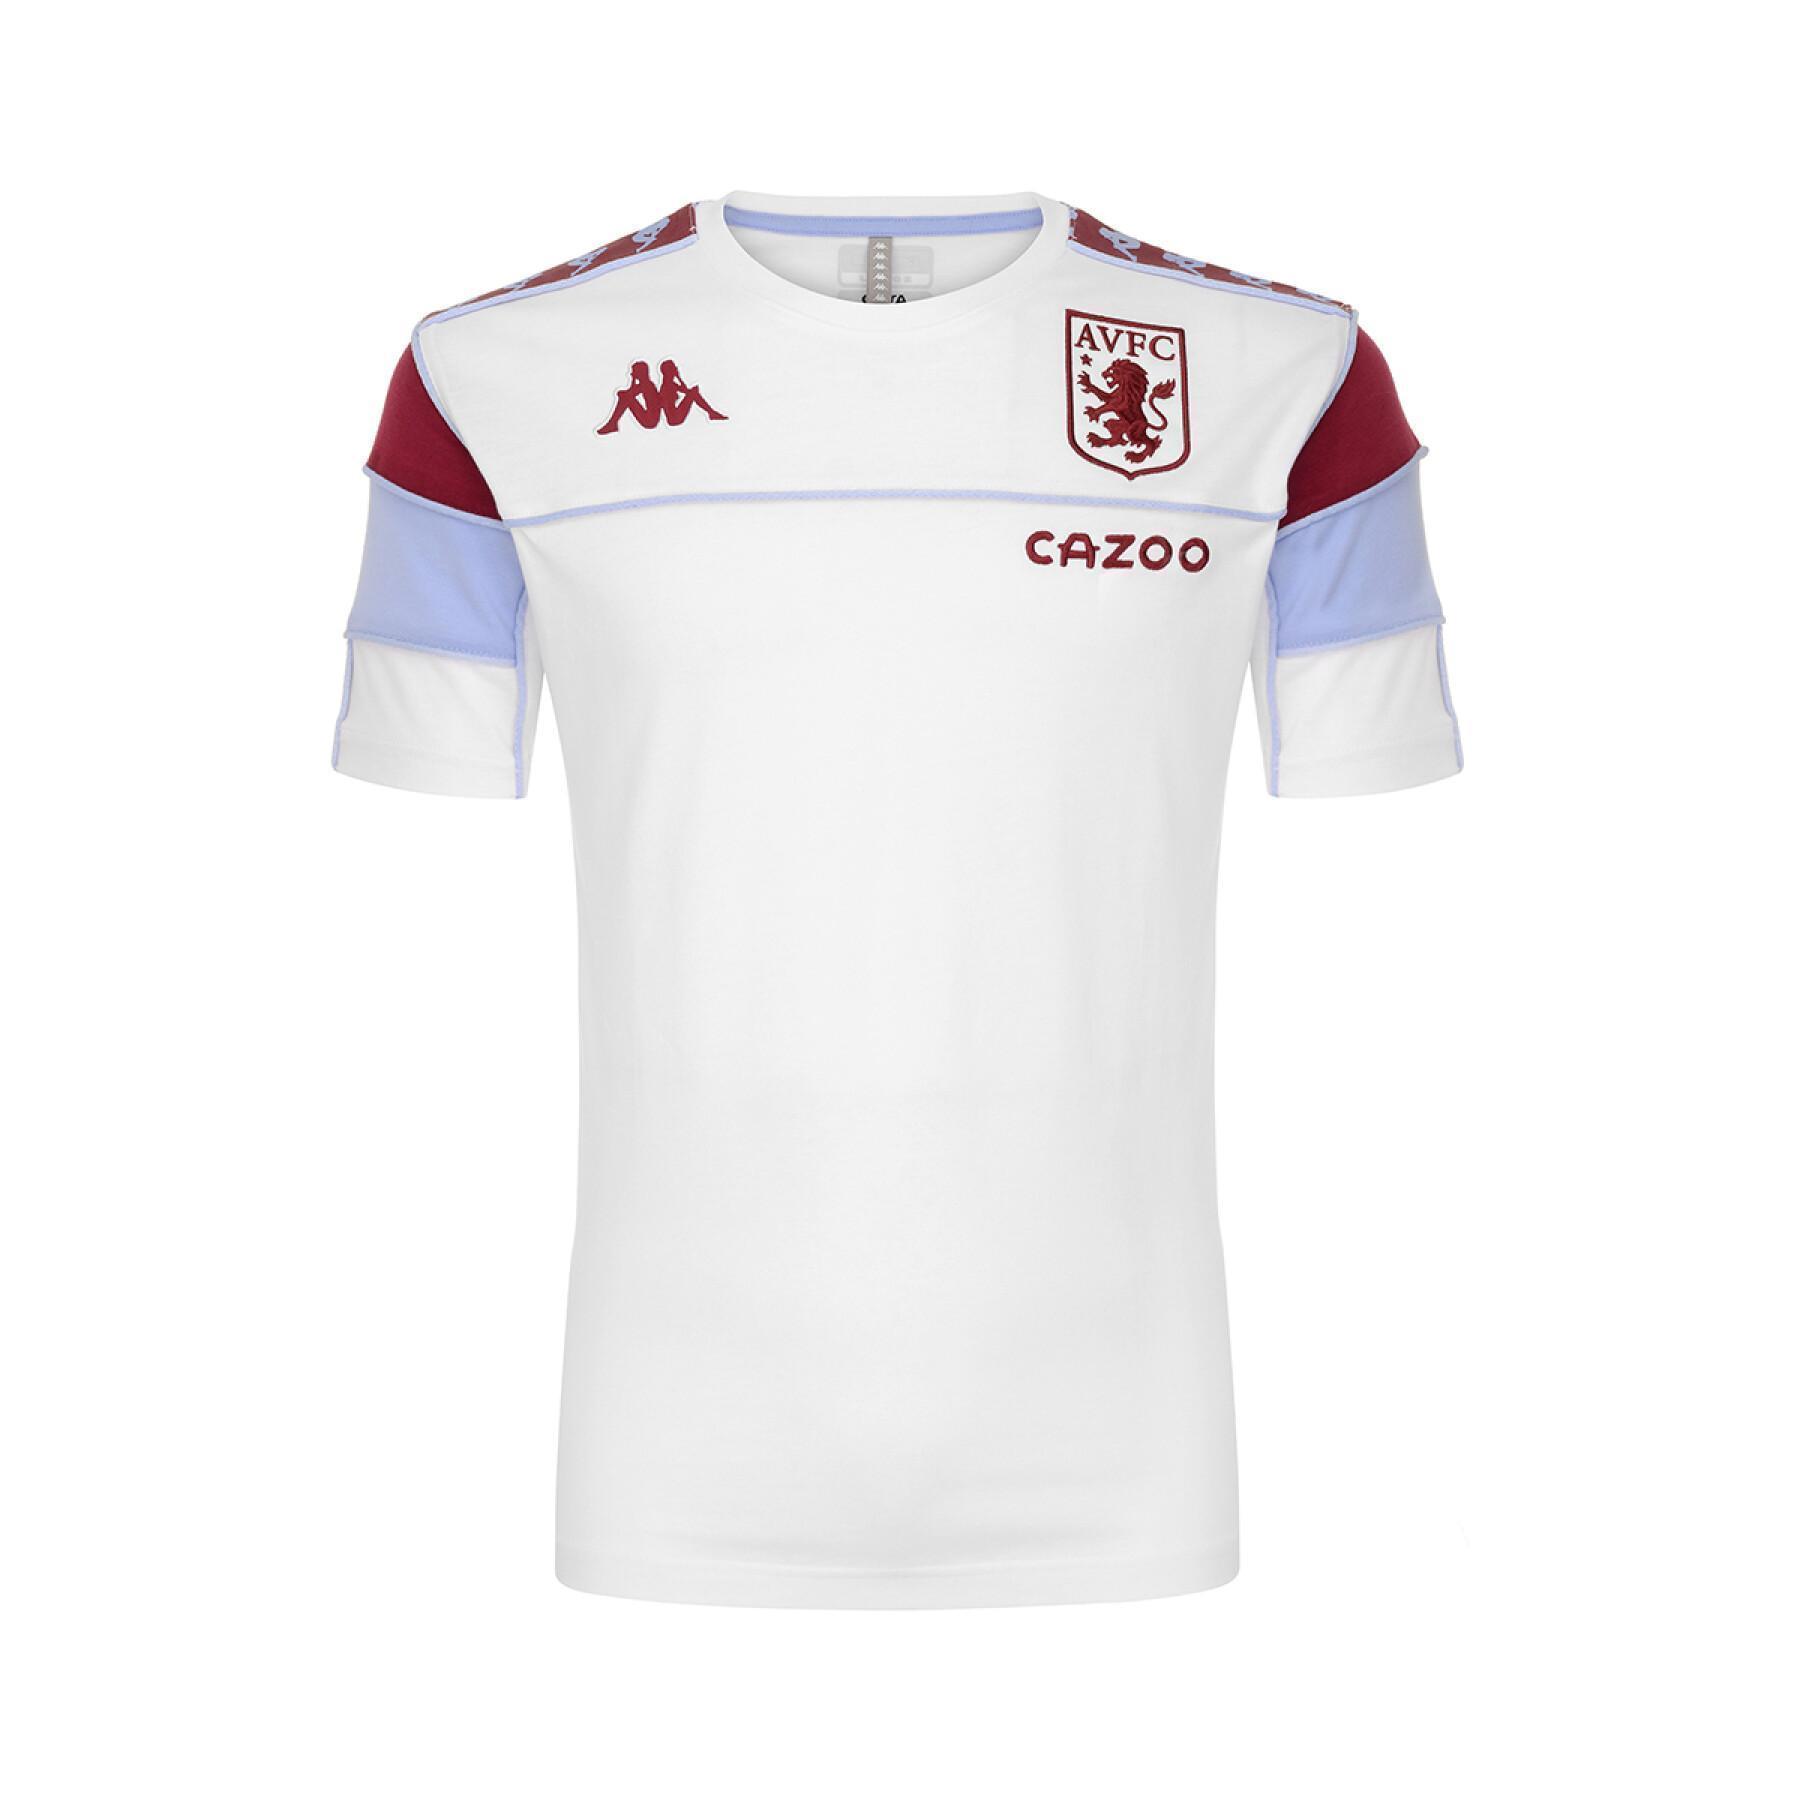 Koszulka Aston Villa FC 2021/22 222 banda arari slim